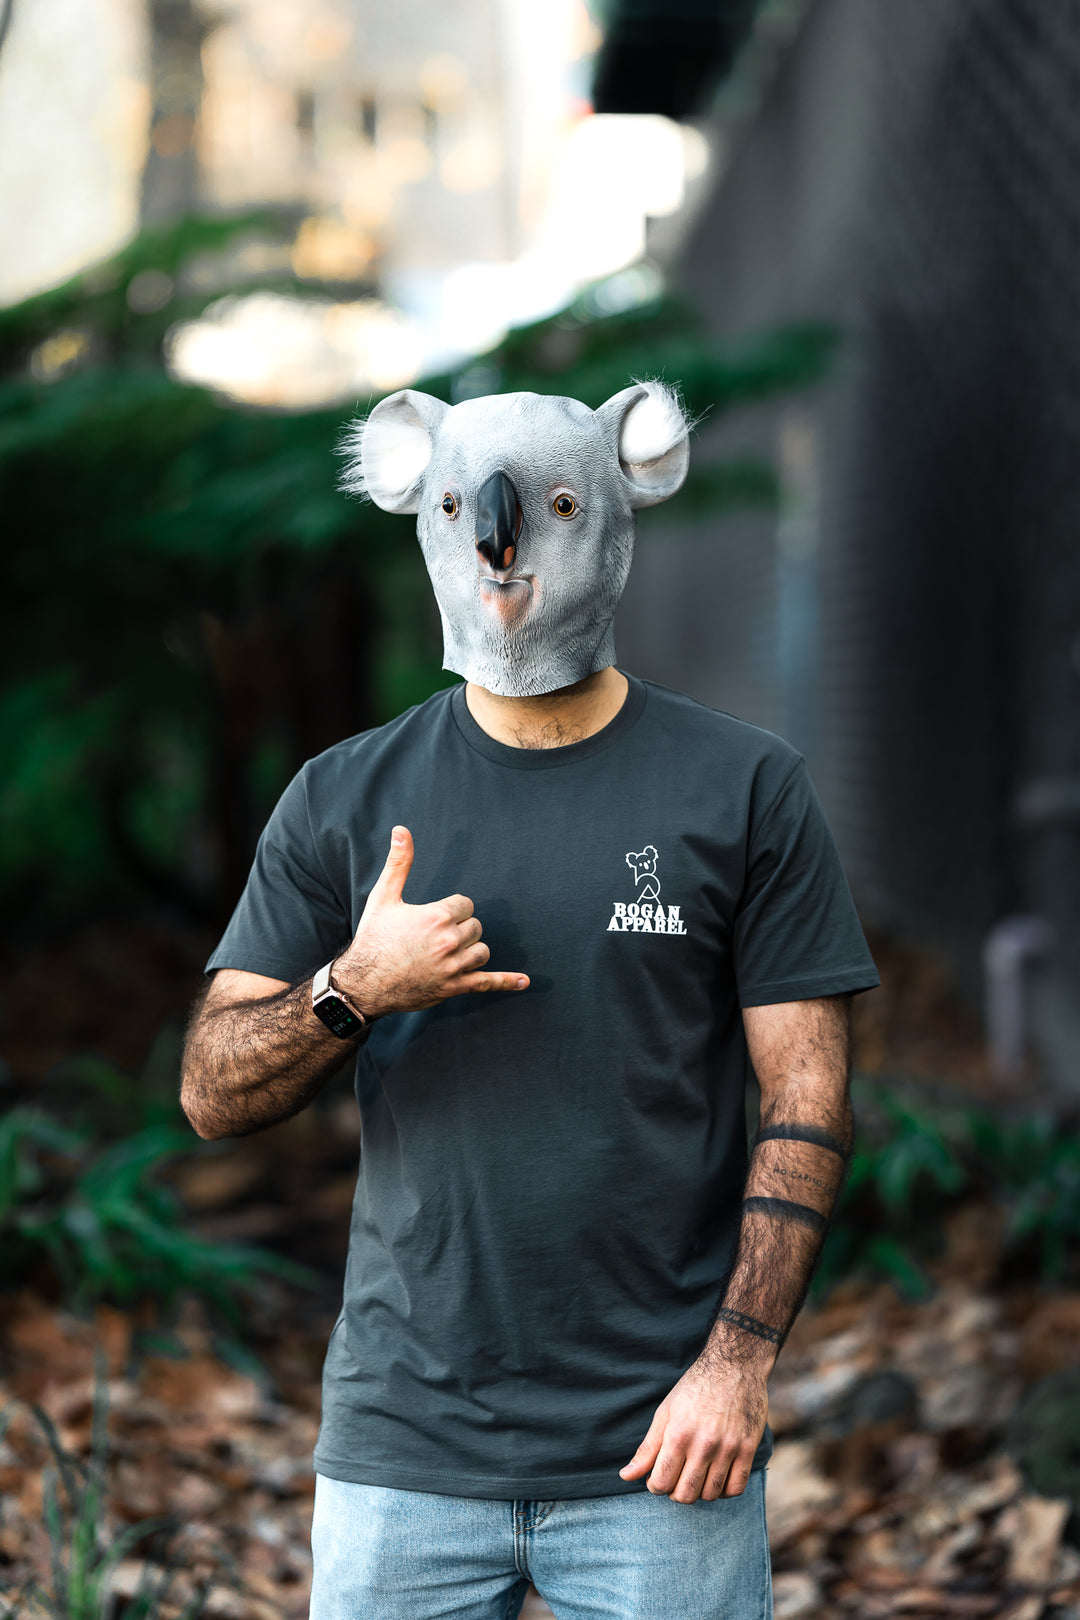 Bogan Apparel wearing Australian designed unisex t-shirts. Photo taken hosier lane - Melbourne